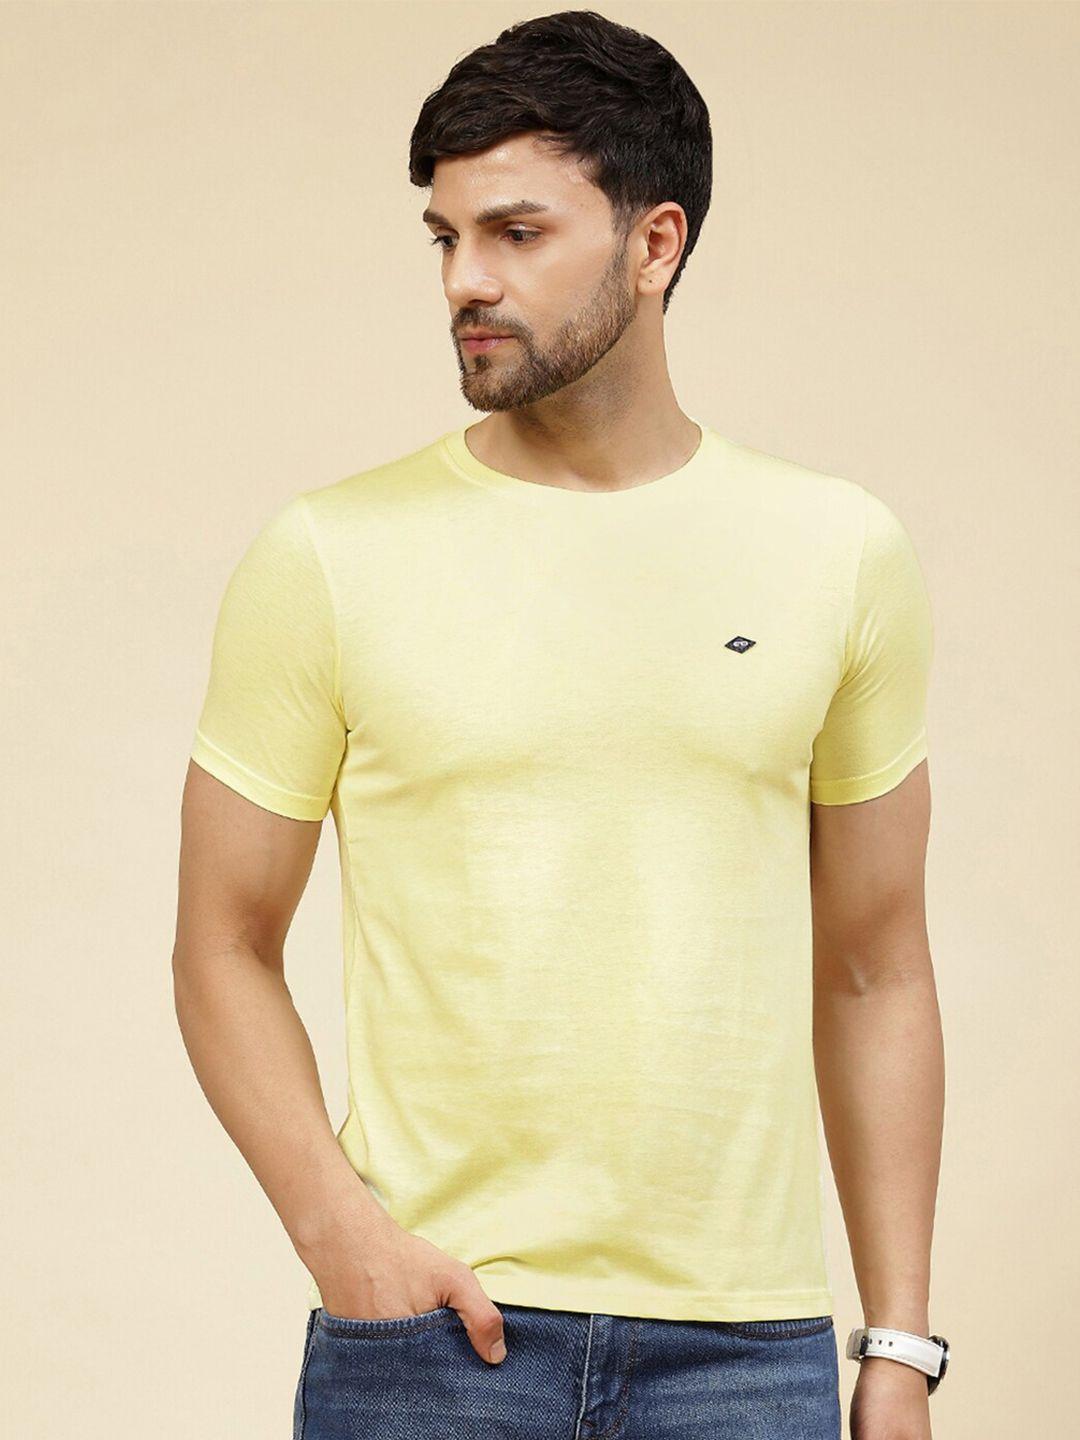 cloak & decker by monte carlo men yellow applique t-shirt